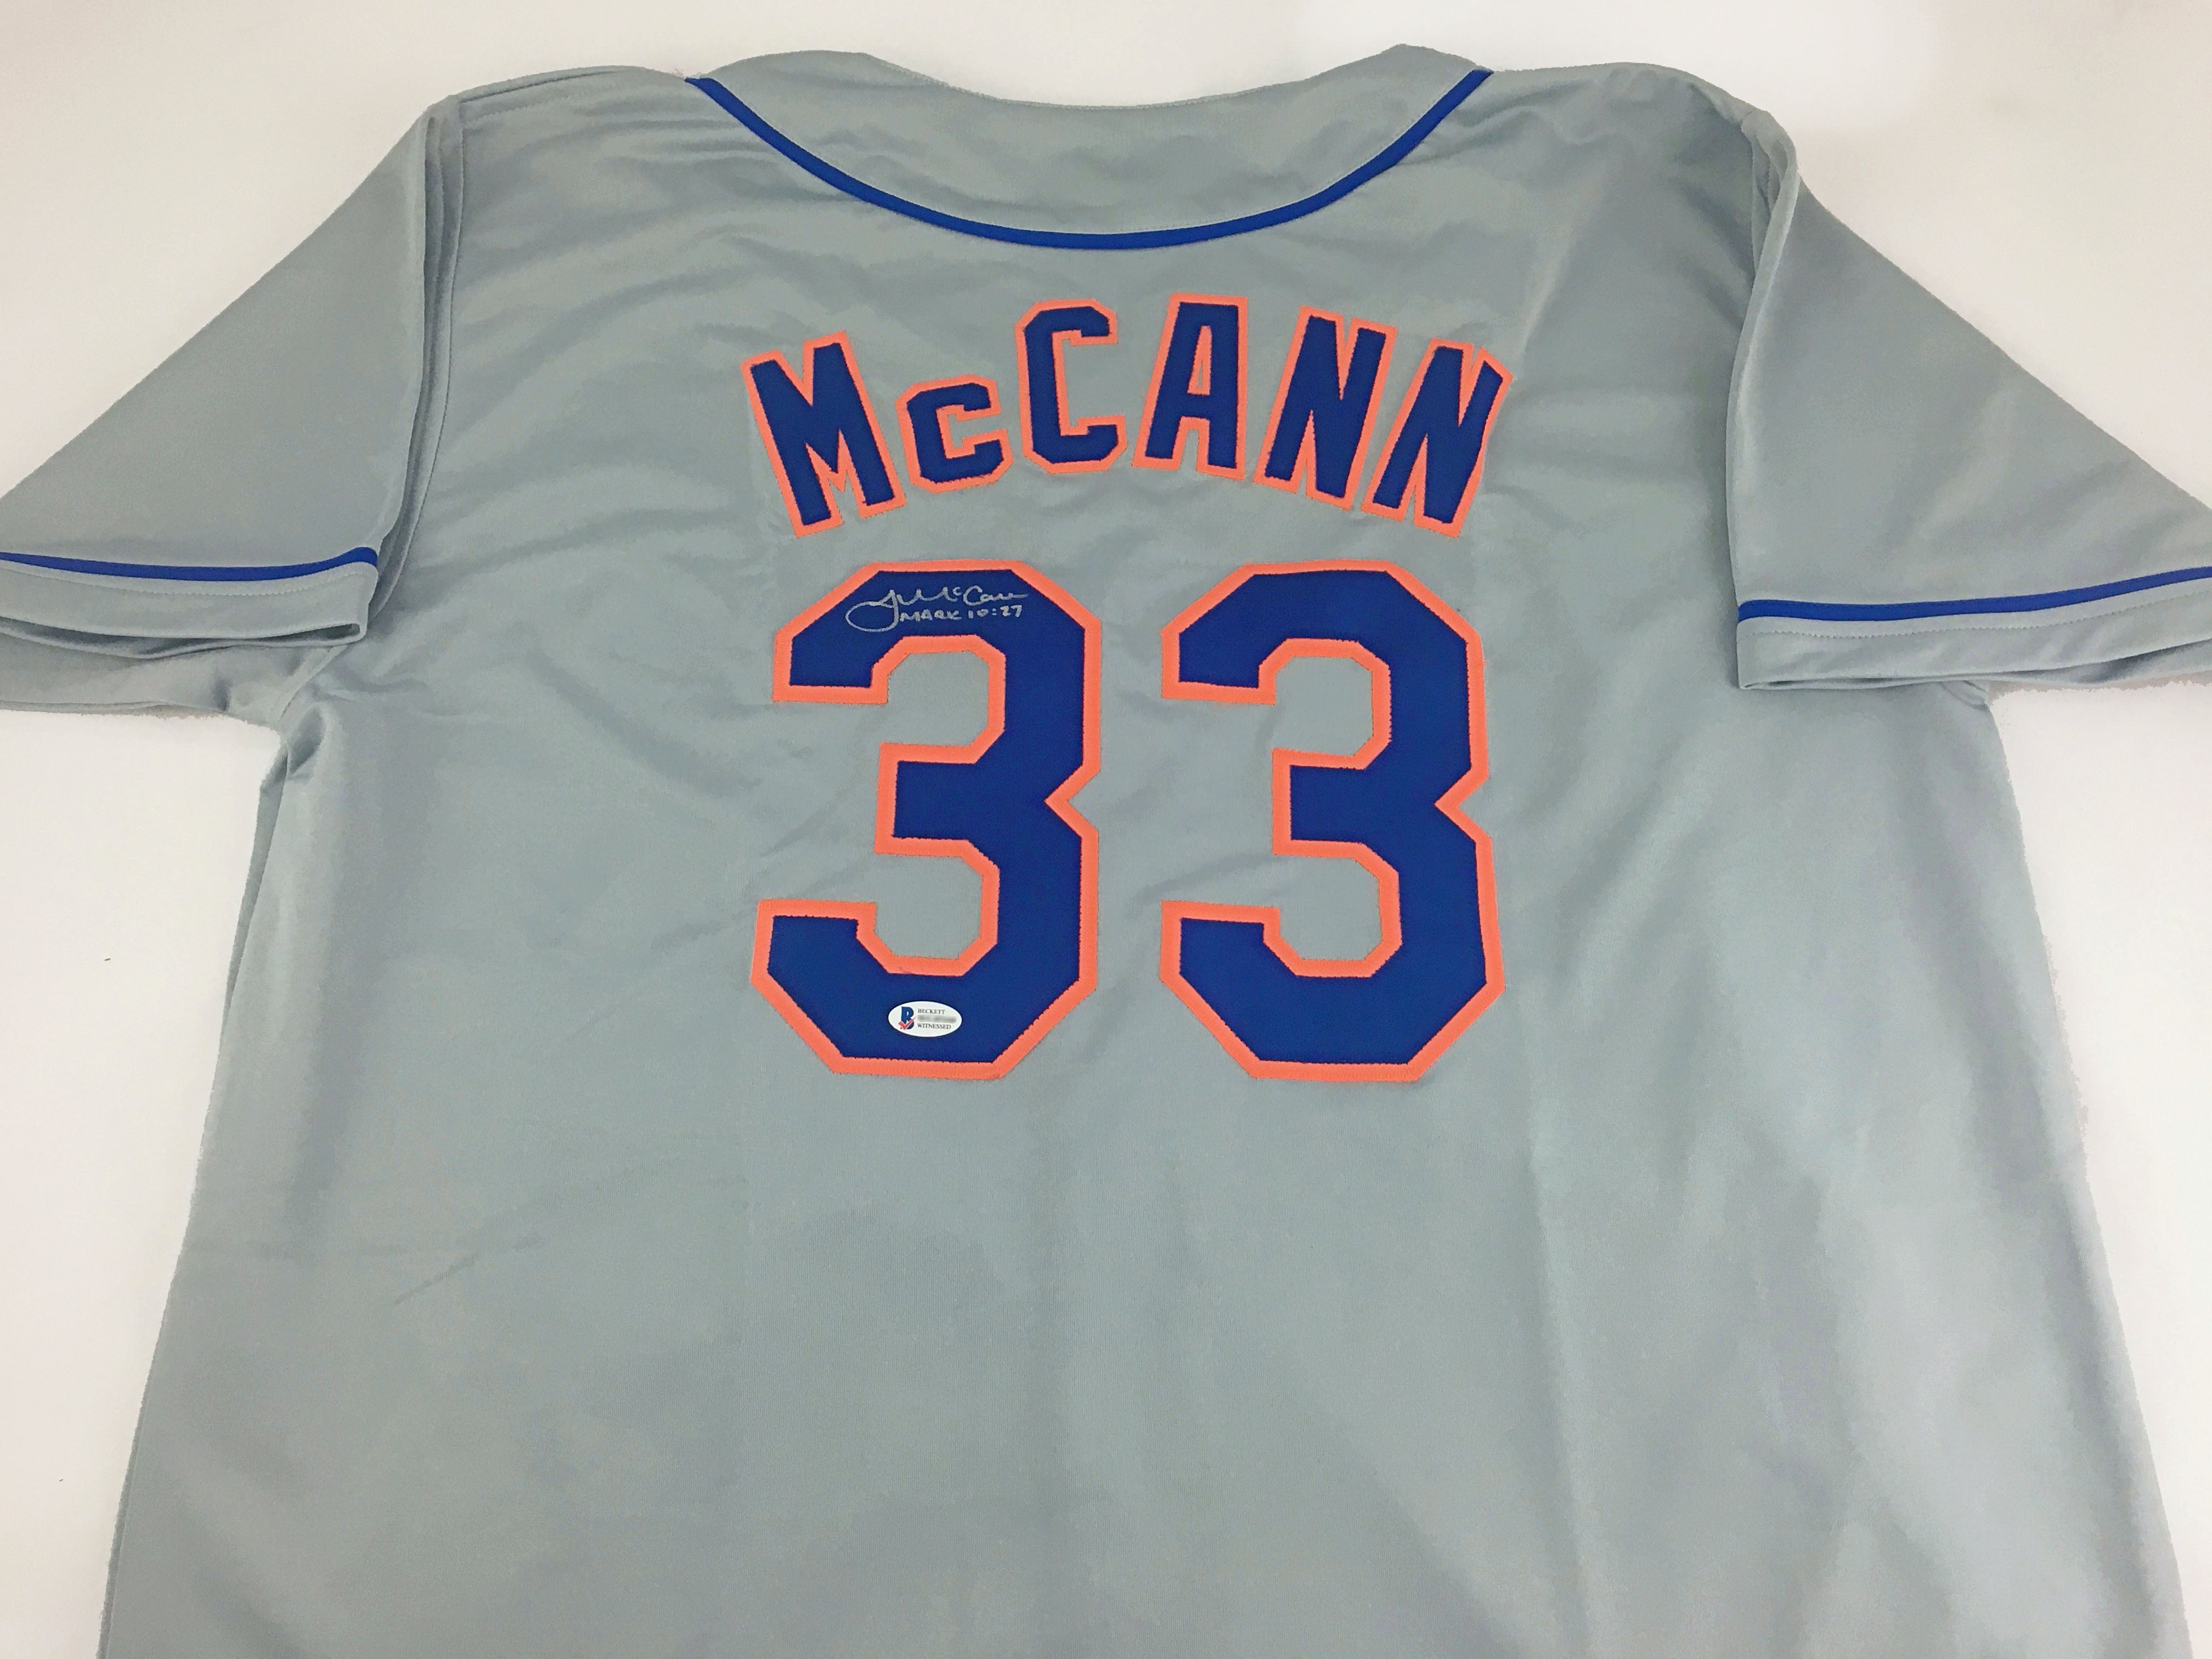 James McCann Signed Gray Baseball Jersey - Size XL: BM Authentics